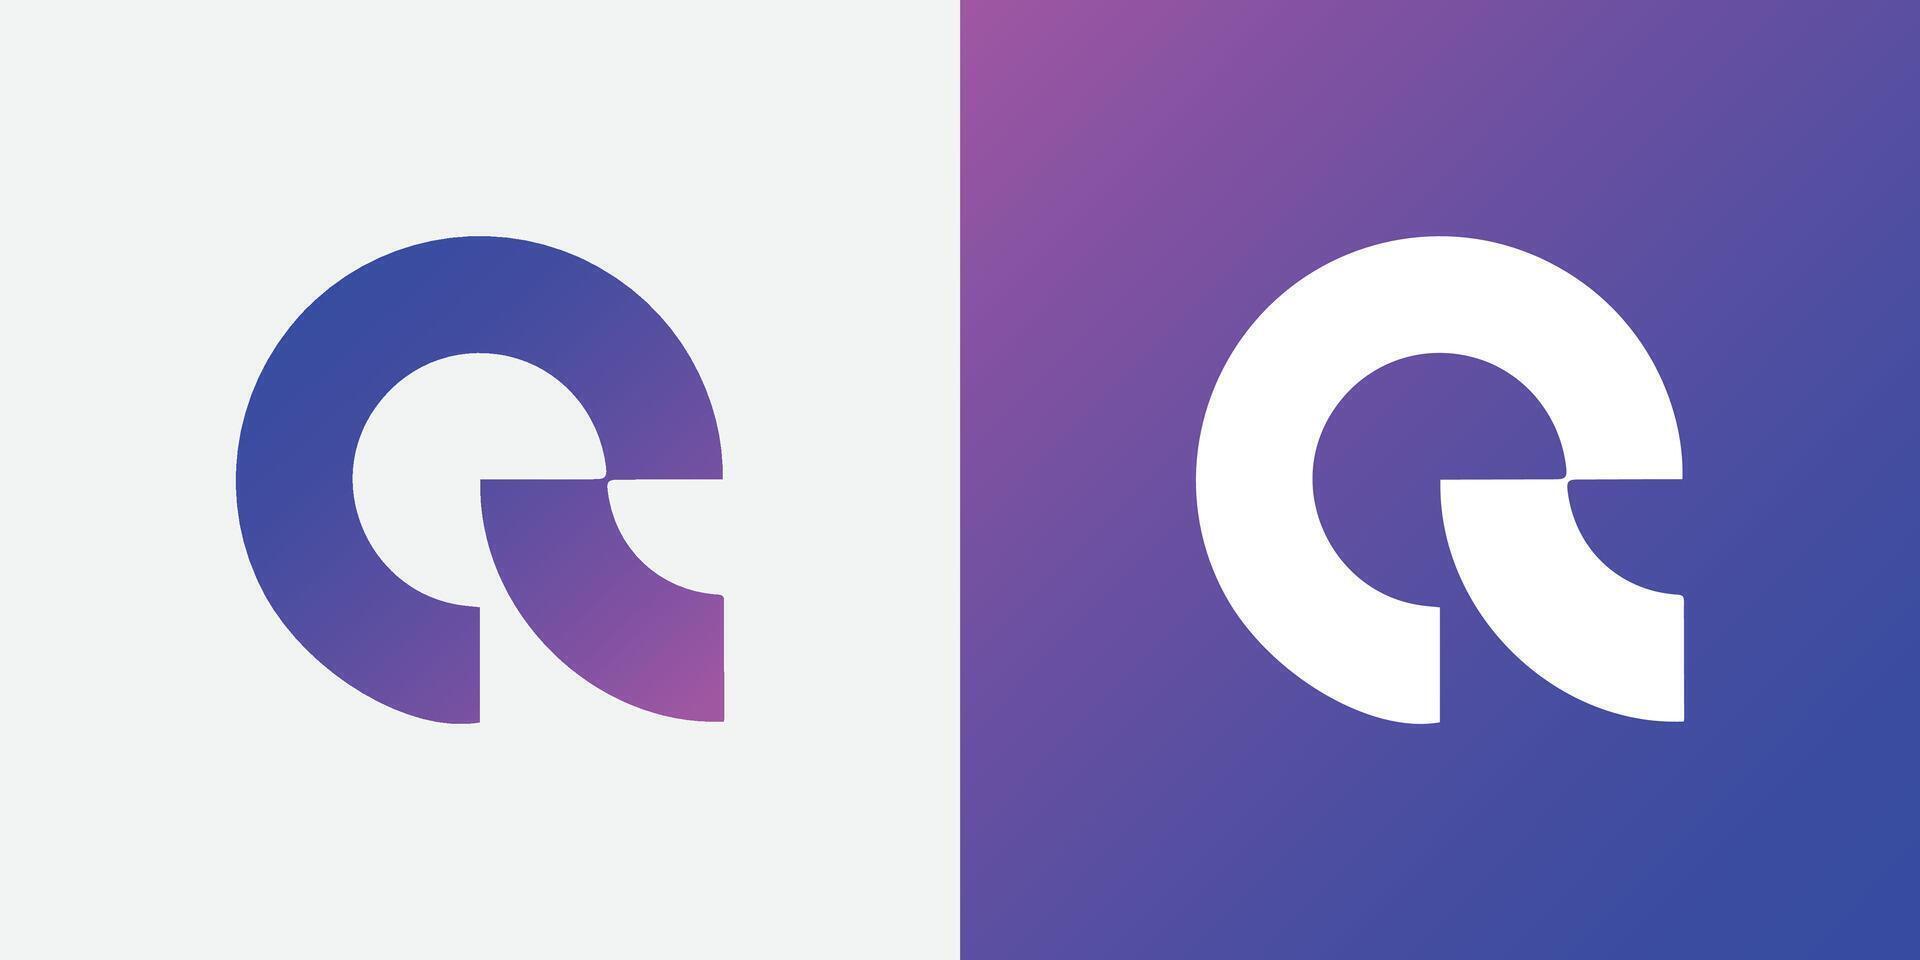 Q logo letter design on luxury background. Q logo monogram initials letter concept vector